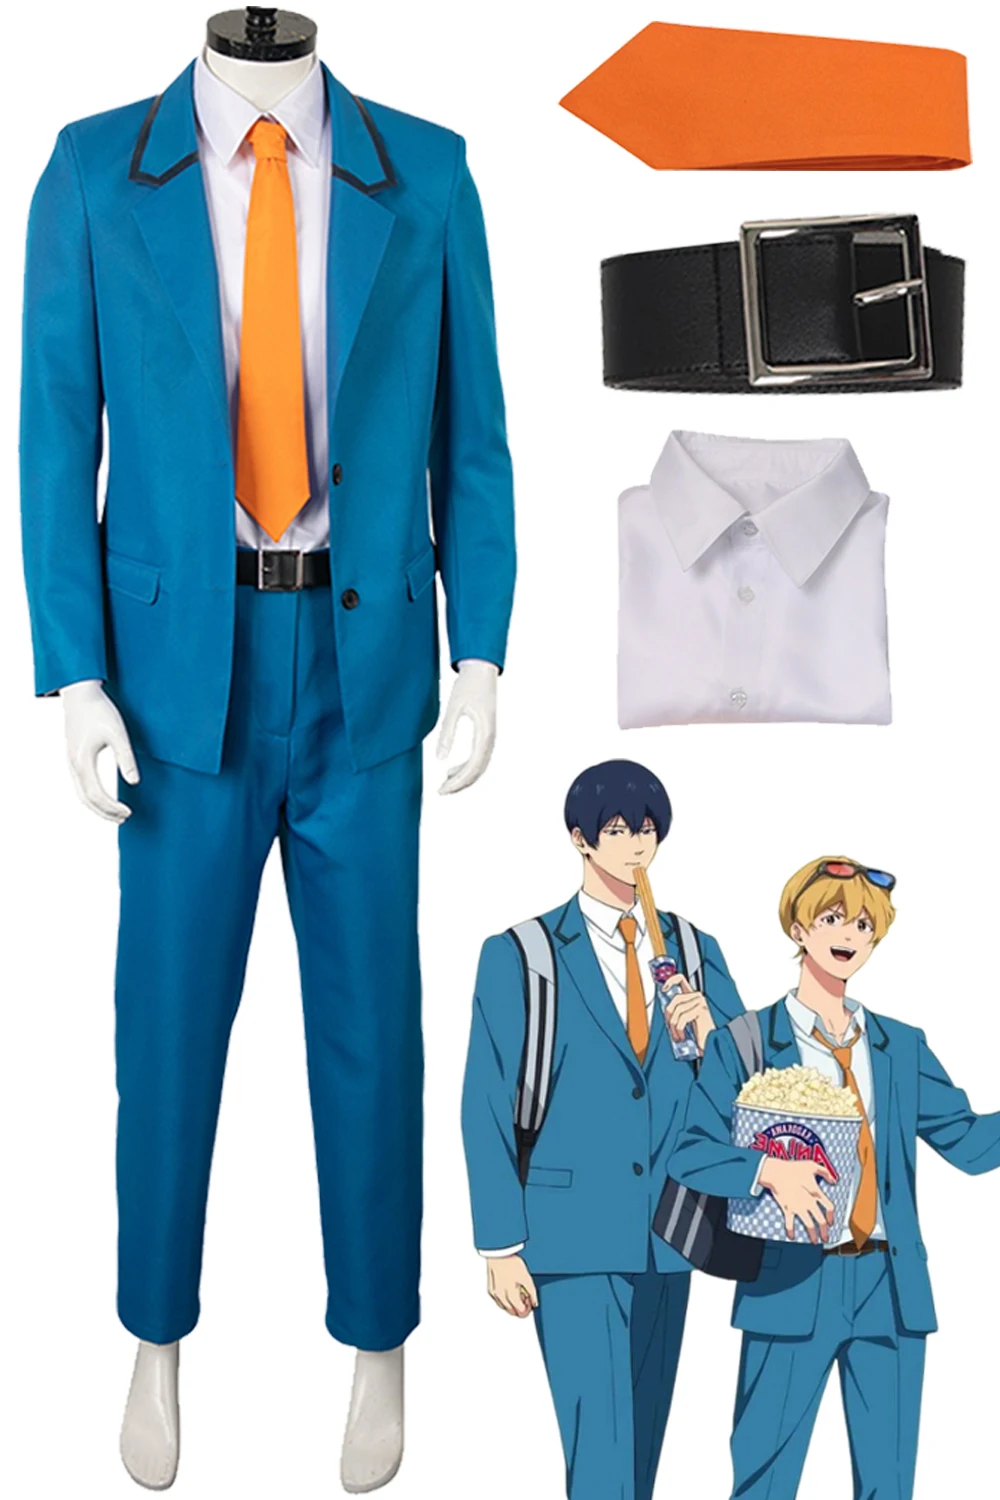 

Kiyomine Haruka Cosplay Fantasy school Uniform Anime Boukyaku Cosplay Battery Disguise Blue Suits Orange Tie Men Halloween Suits